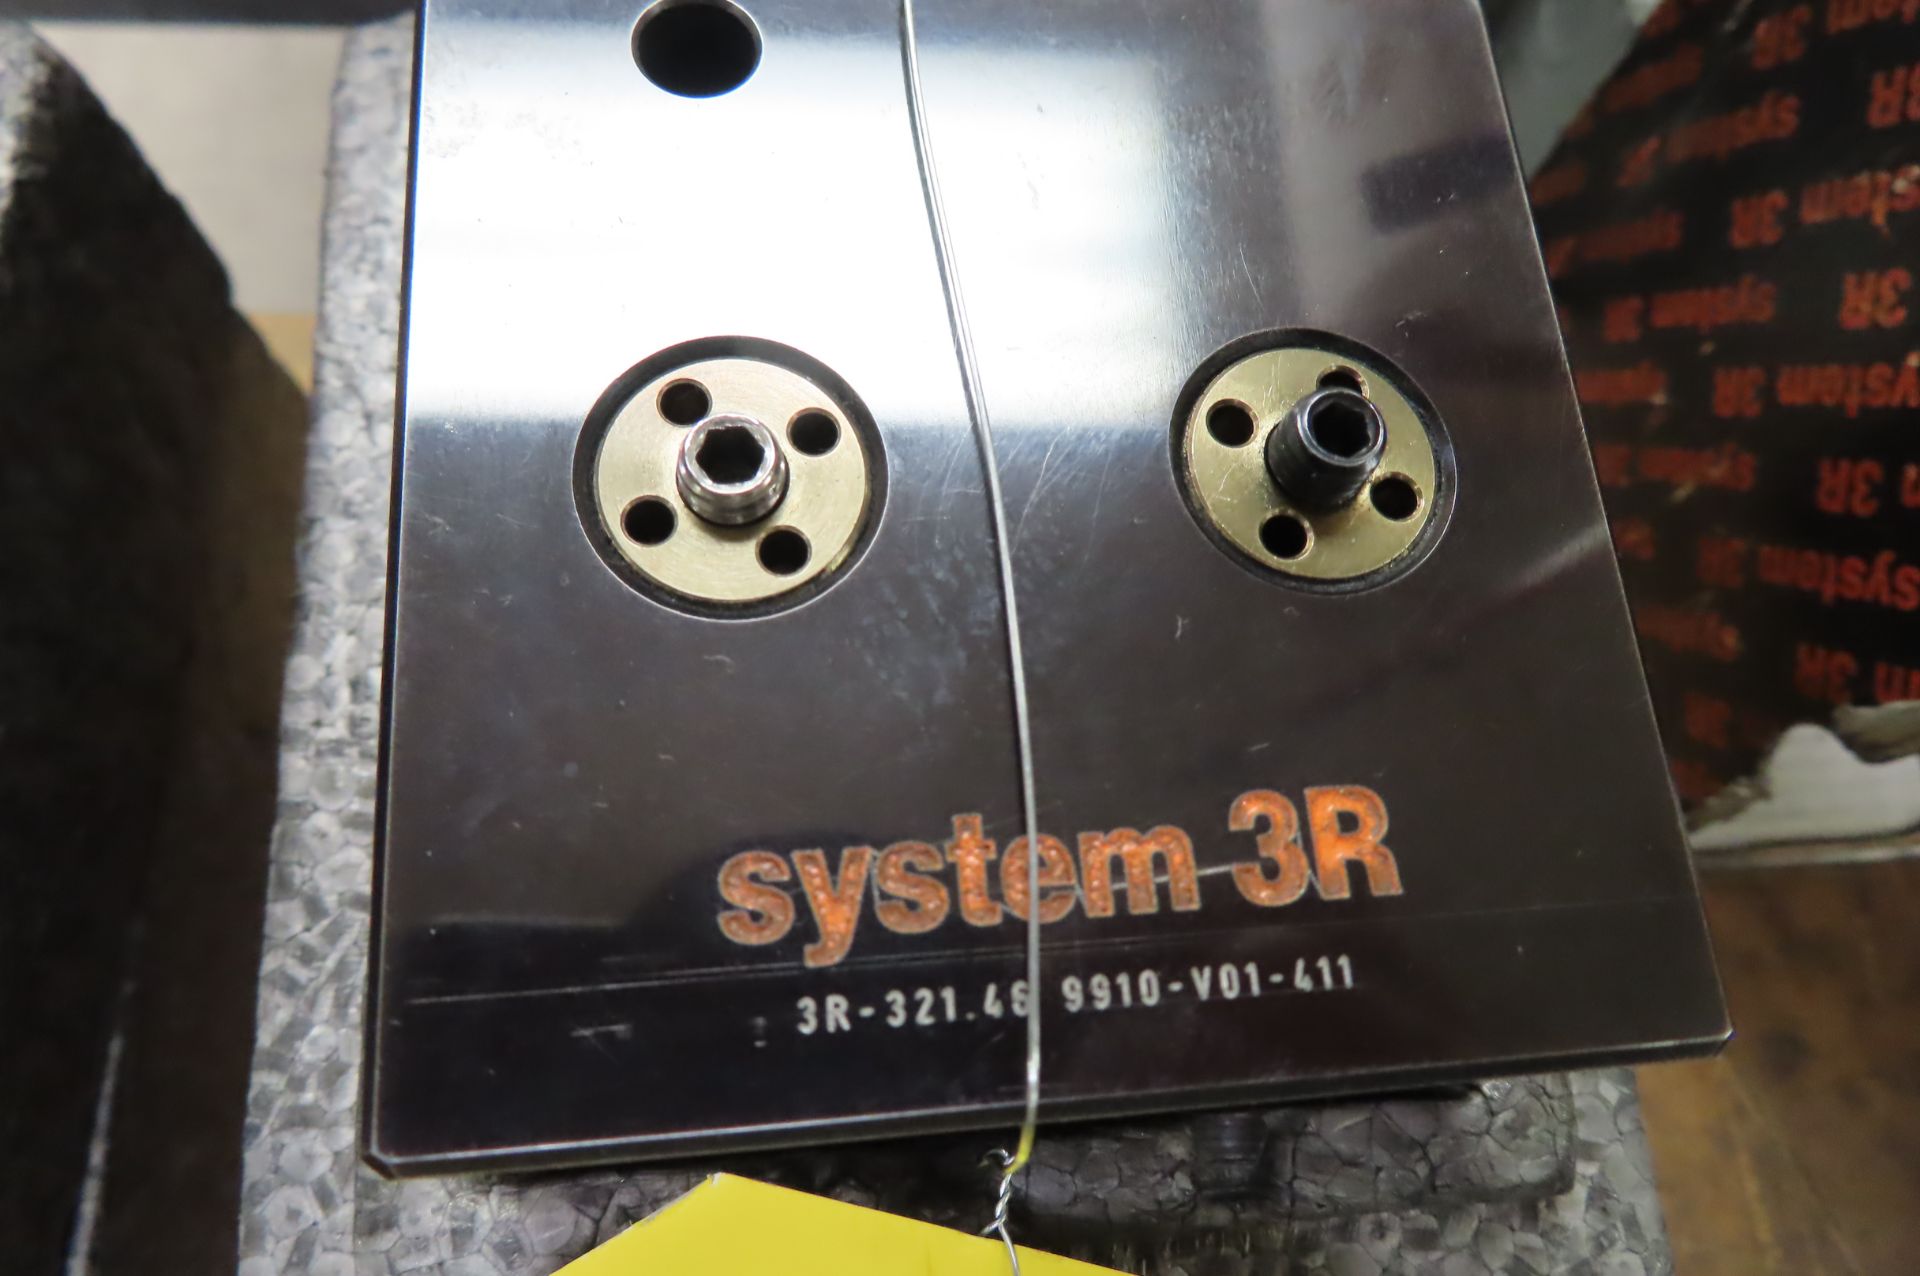 SYSTEM 3R 321.46 MINI BLOCK - Image 2 of 2